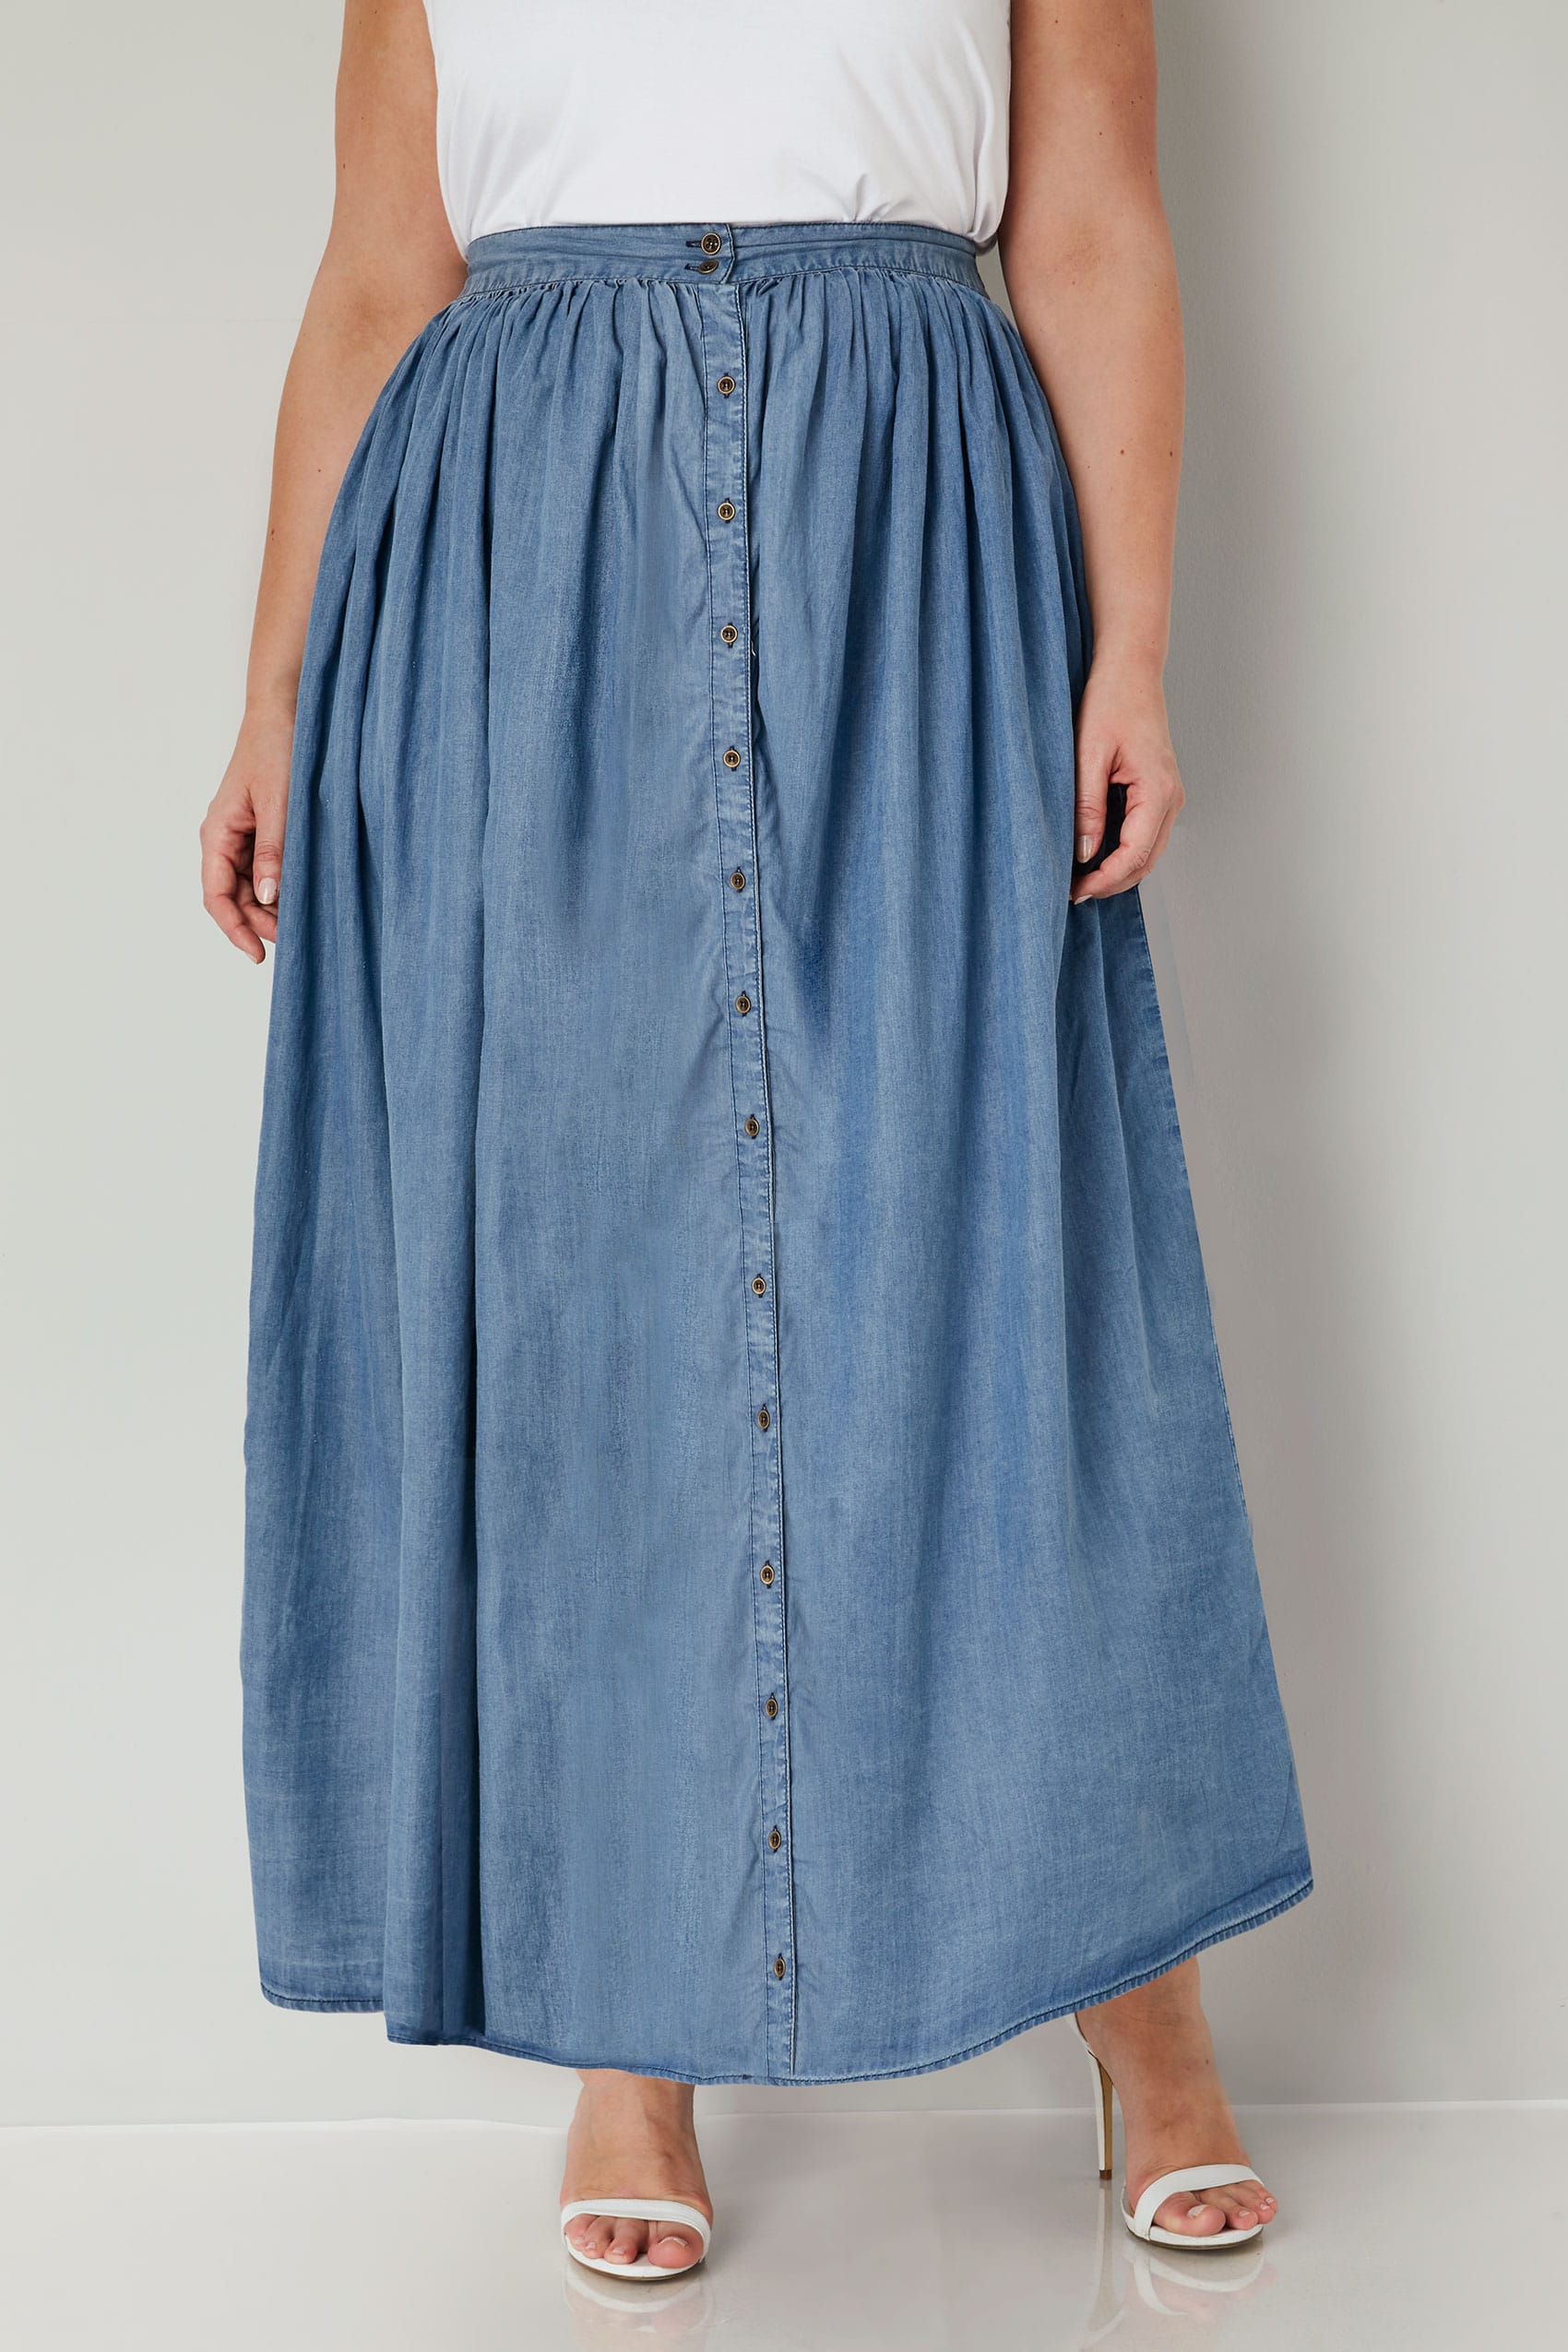 YOURS LONDON Denim Blue Tencel Maxi Skirt Plus Size 16 to 321700 x 2550